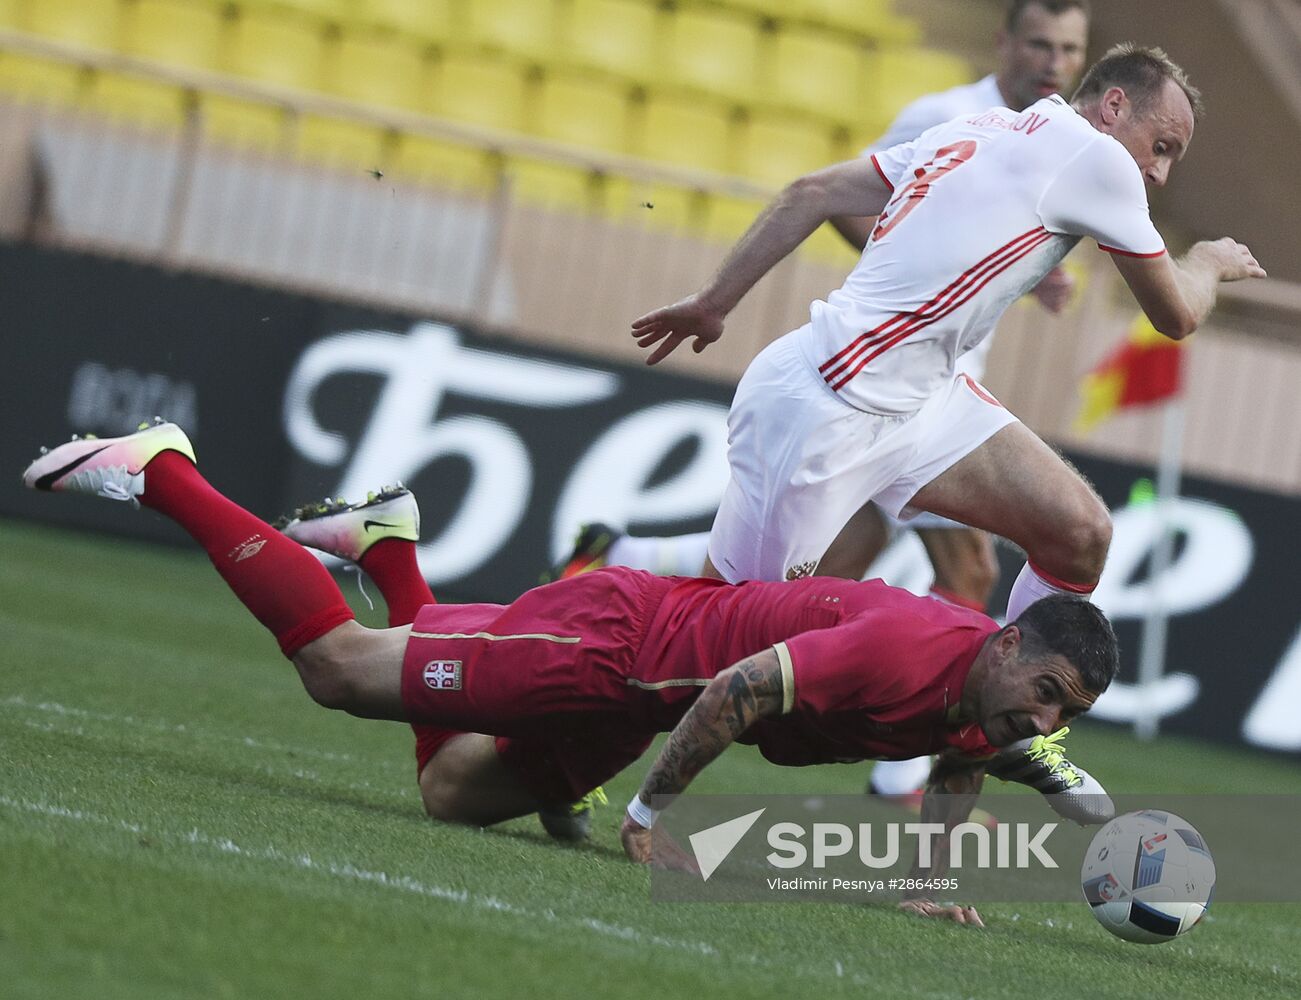 Russia vs. Serbia friendly football match